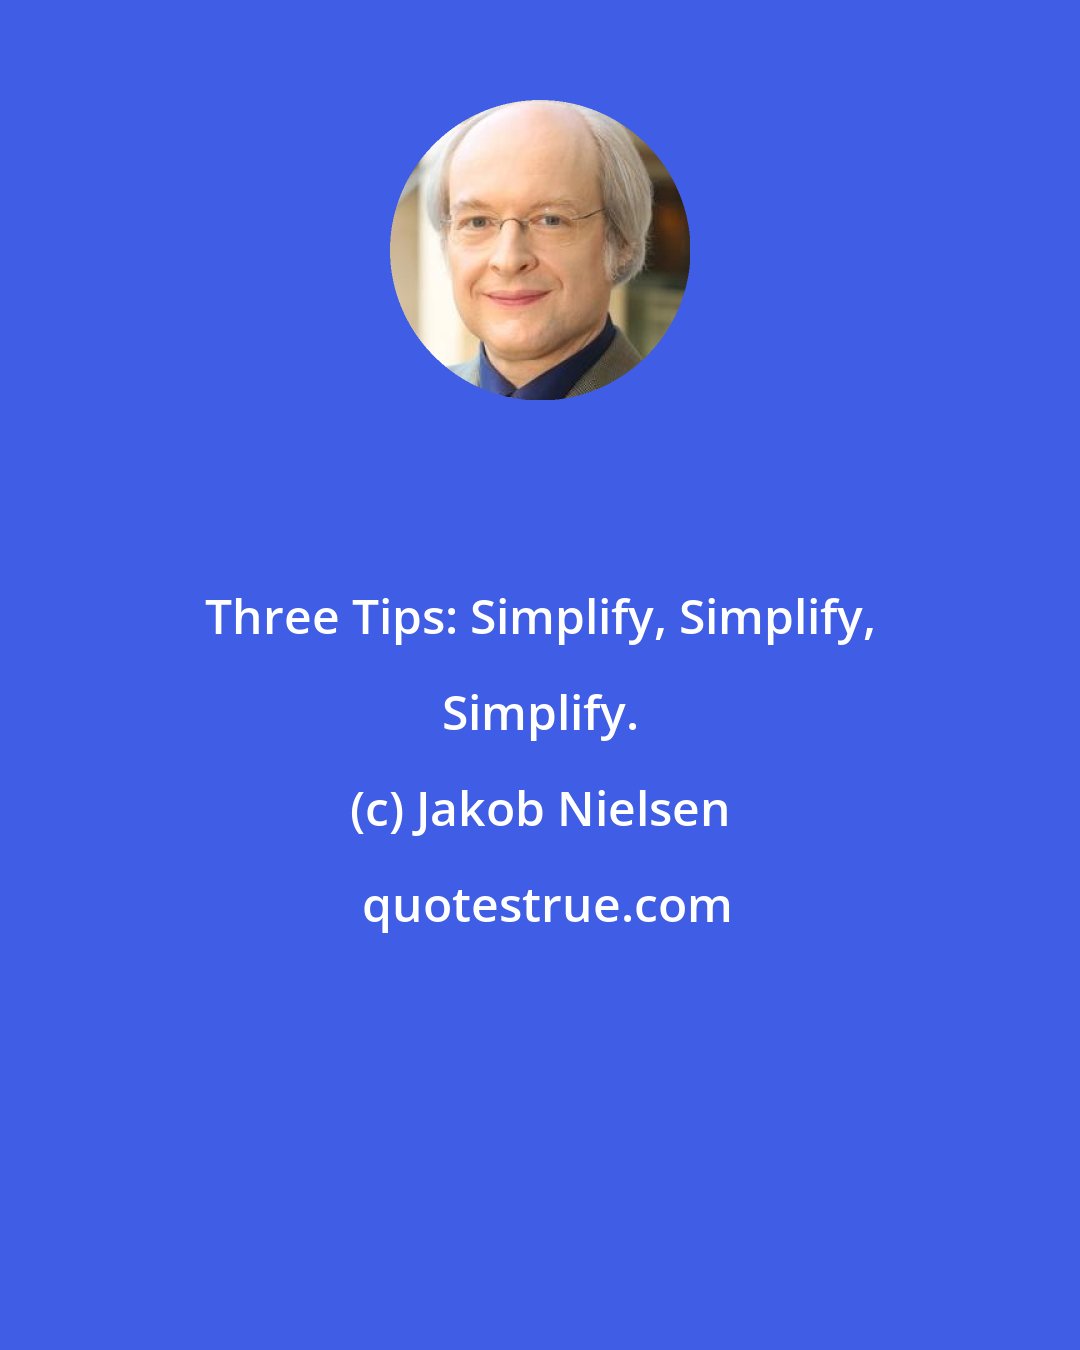 Jakob Nielsen: Three Tips: Simplify, Simplify, Simplify.